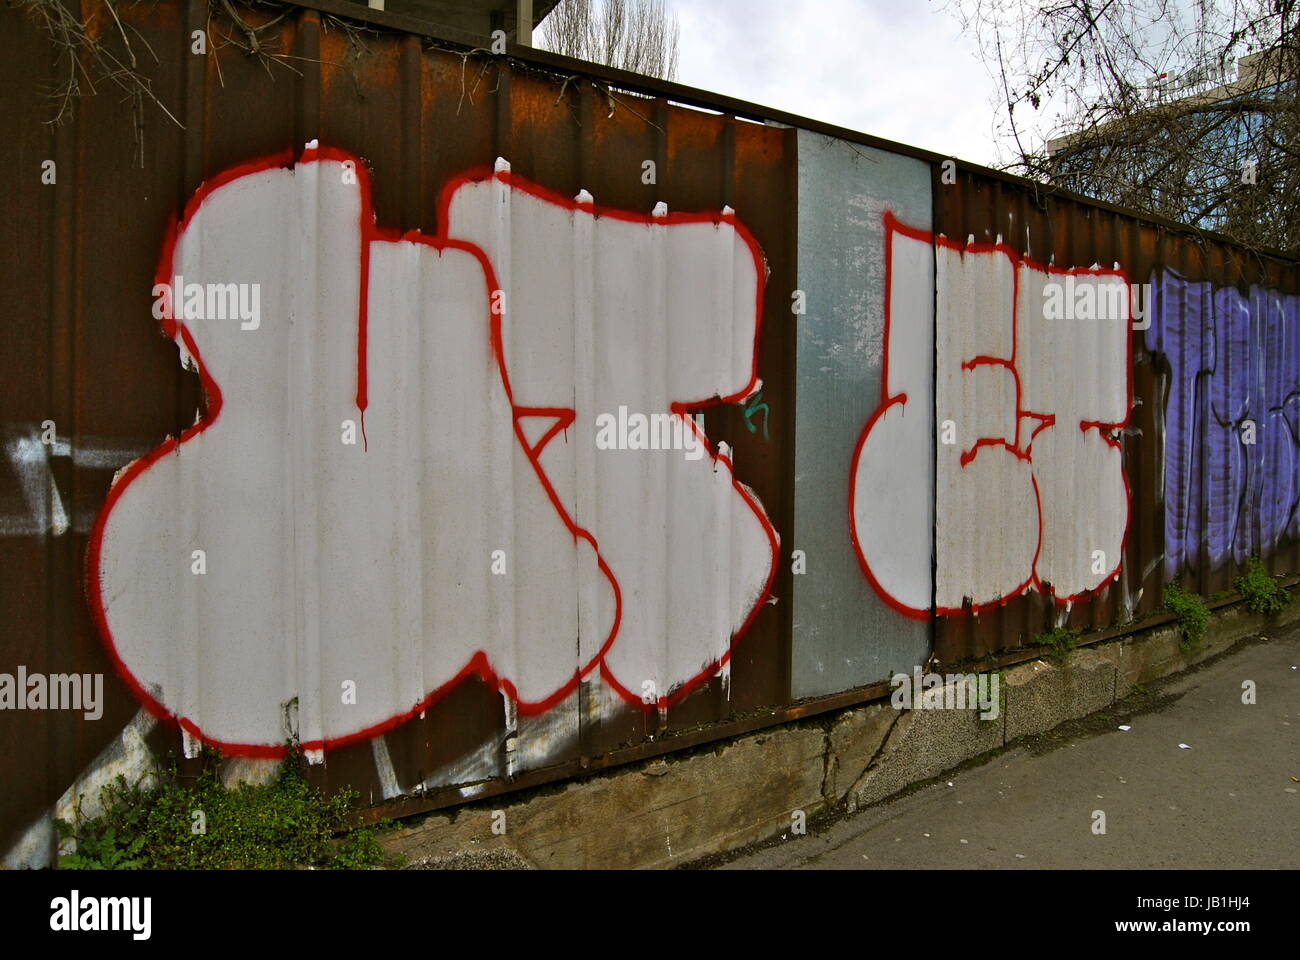 Graffiti and street scenes, Sofia, Bulgaria Stock Photo